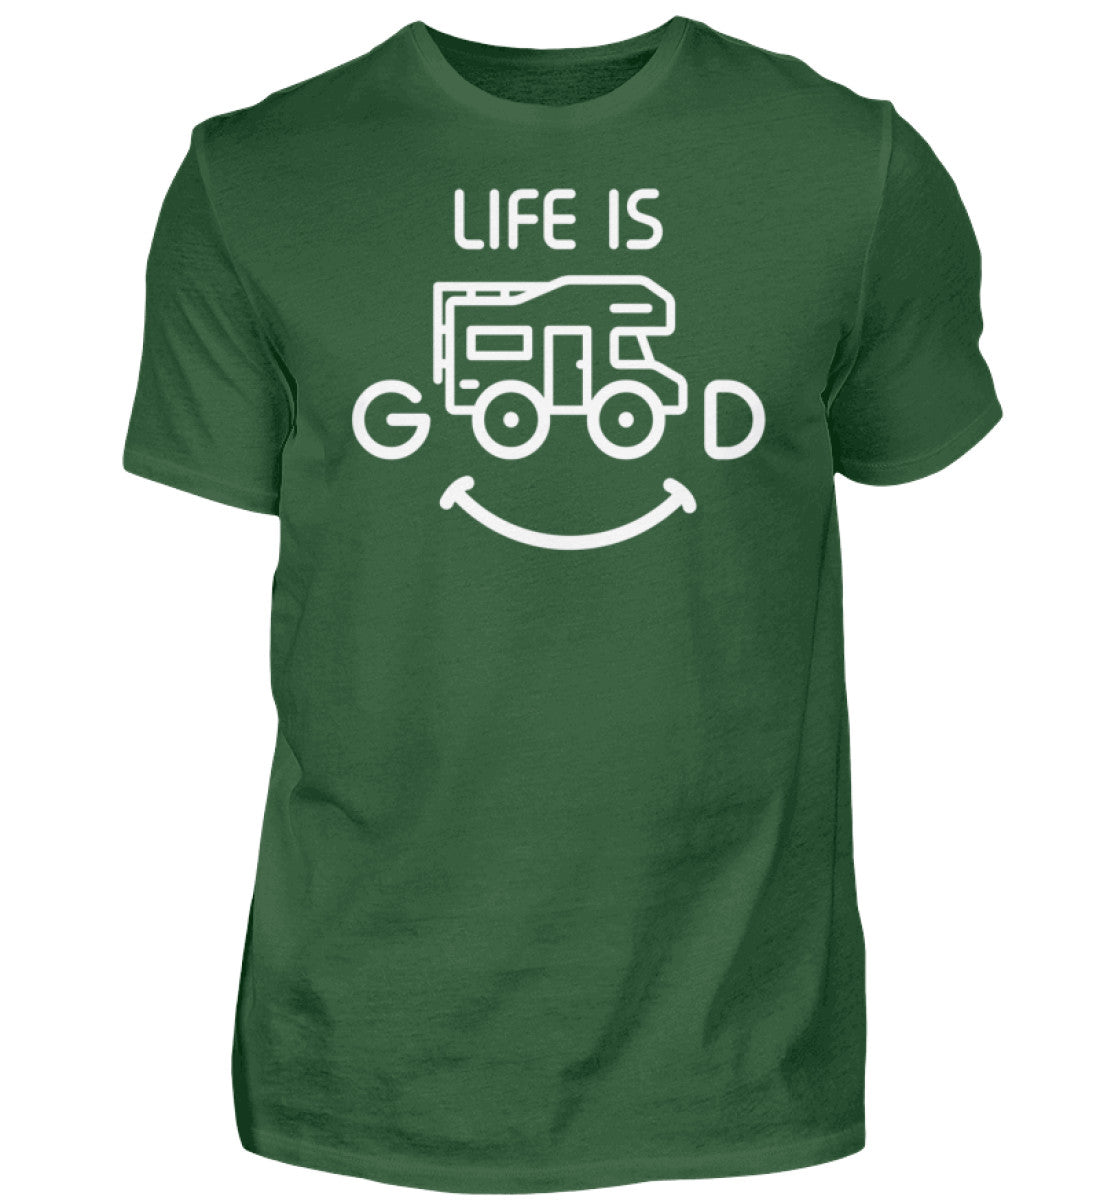 LIFE IS GOOD - Herren Shirt in der Farbe Bottle Green